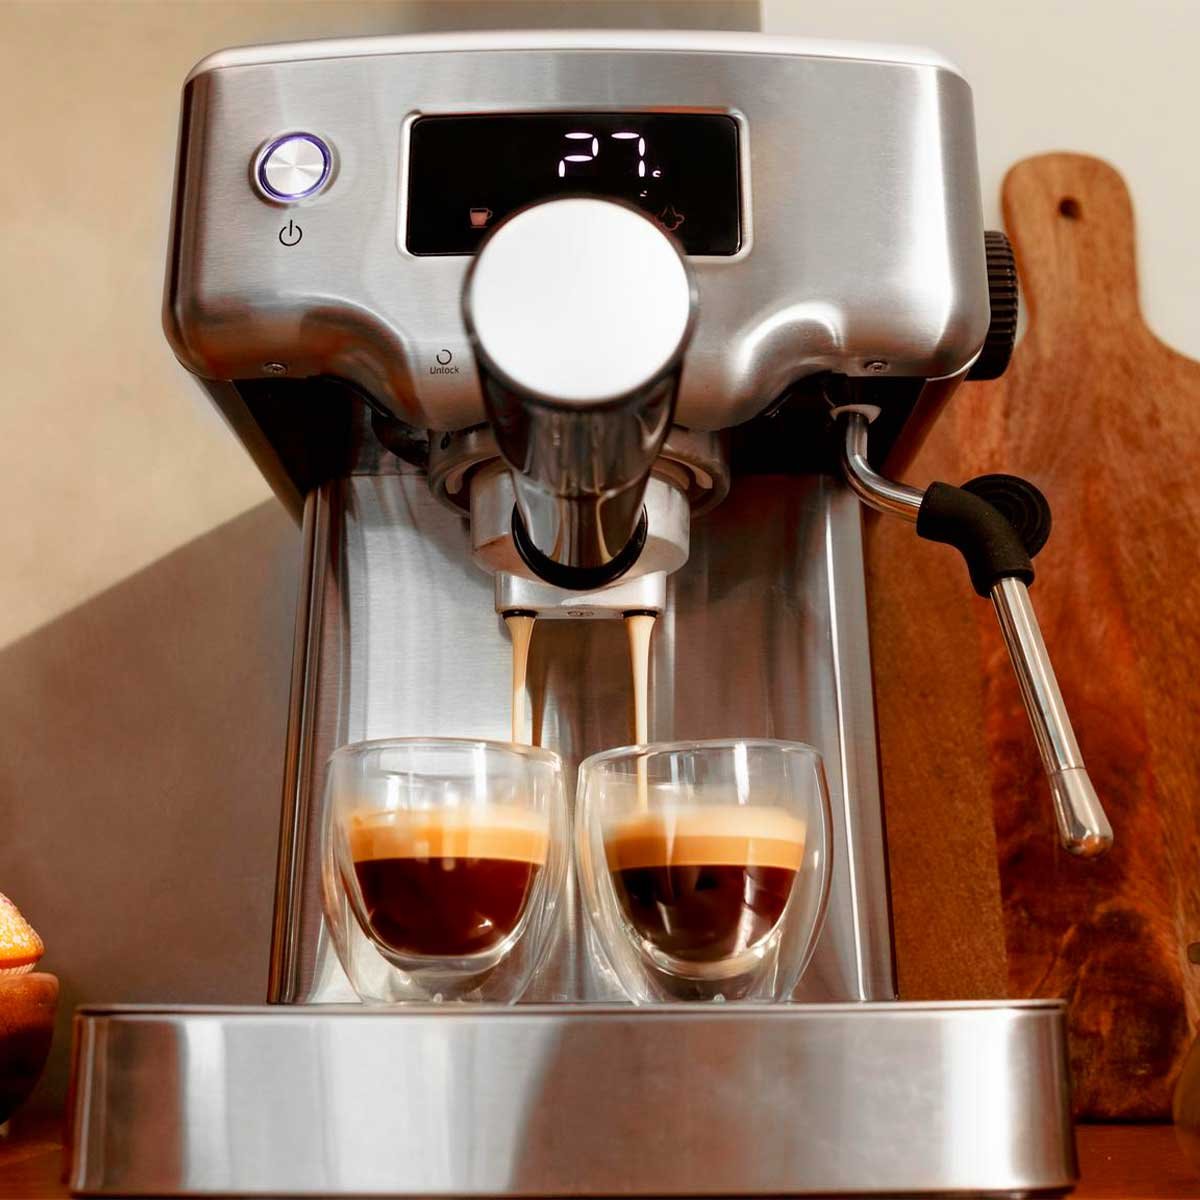 Cafetera Express Power Espresso 20 Barista Compact Cecotec - Conforama